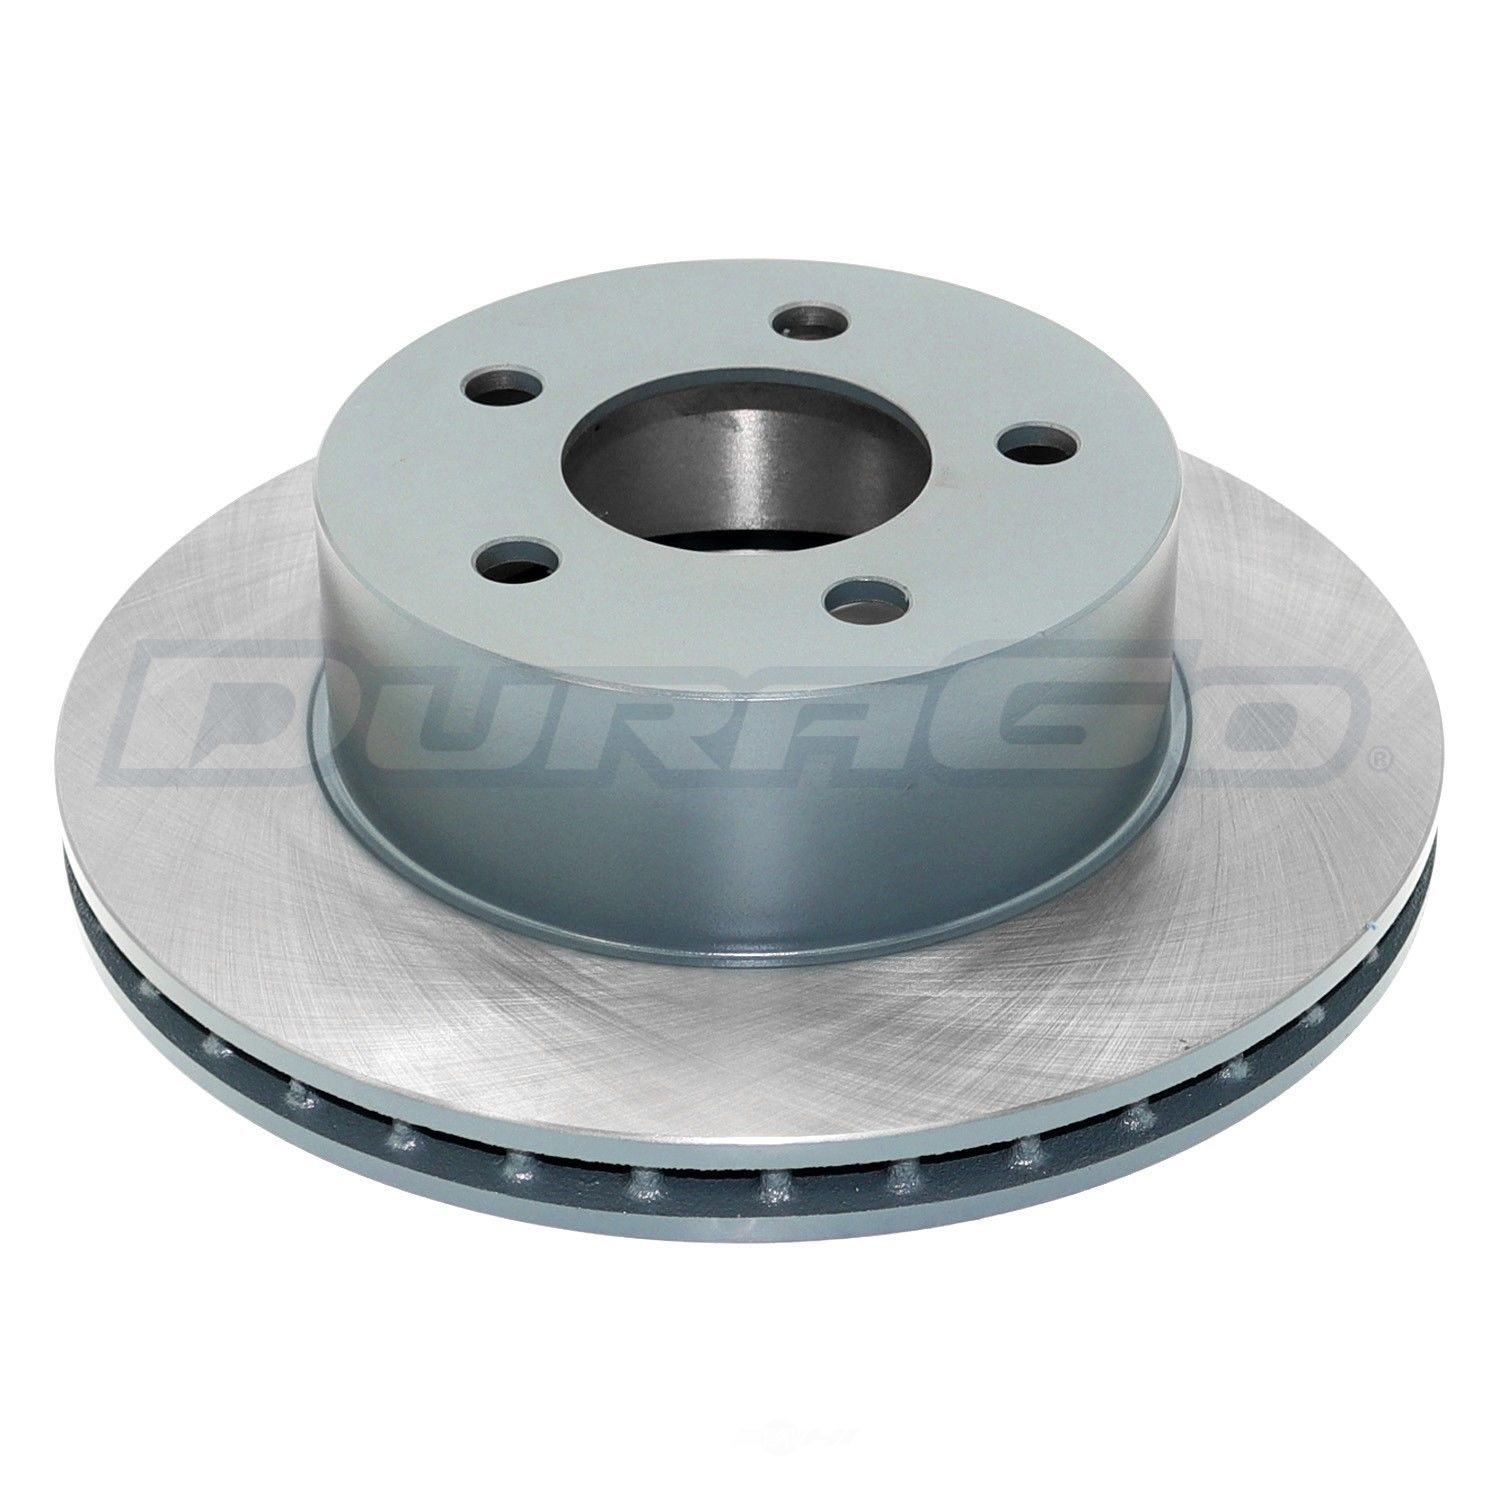 DURAGO TITANIUM SERIES  DTS - Disc Brake Rotor (Front) - DTS BR5115-01